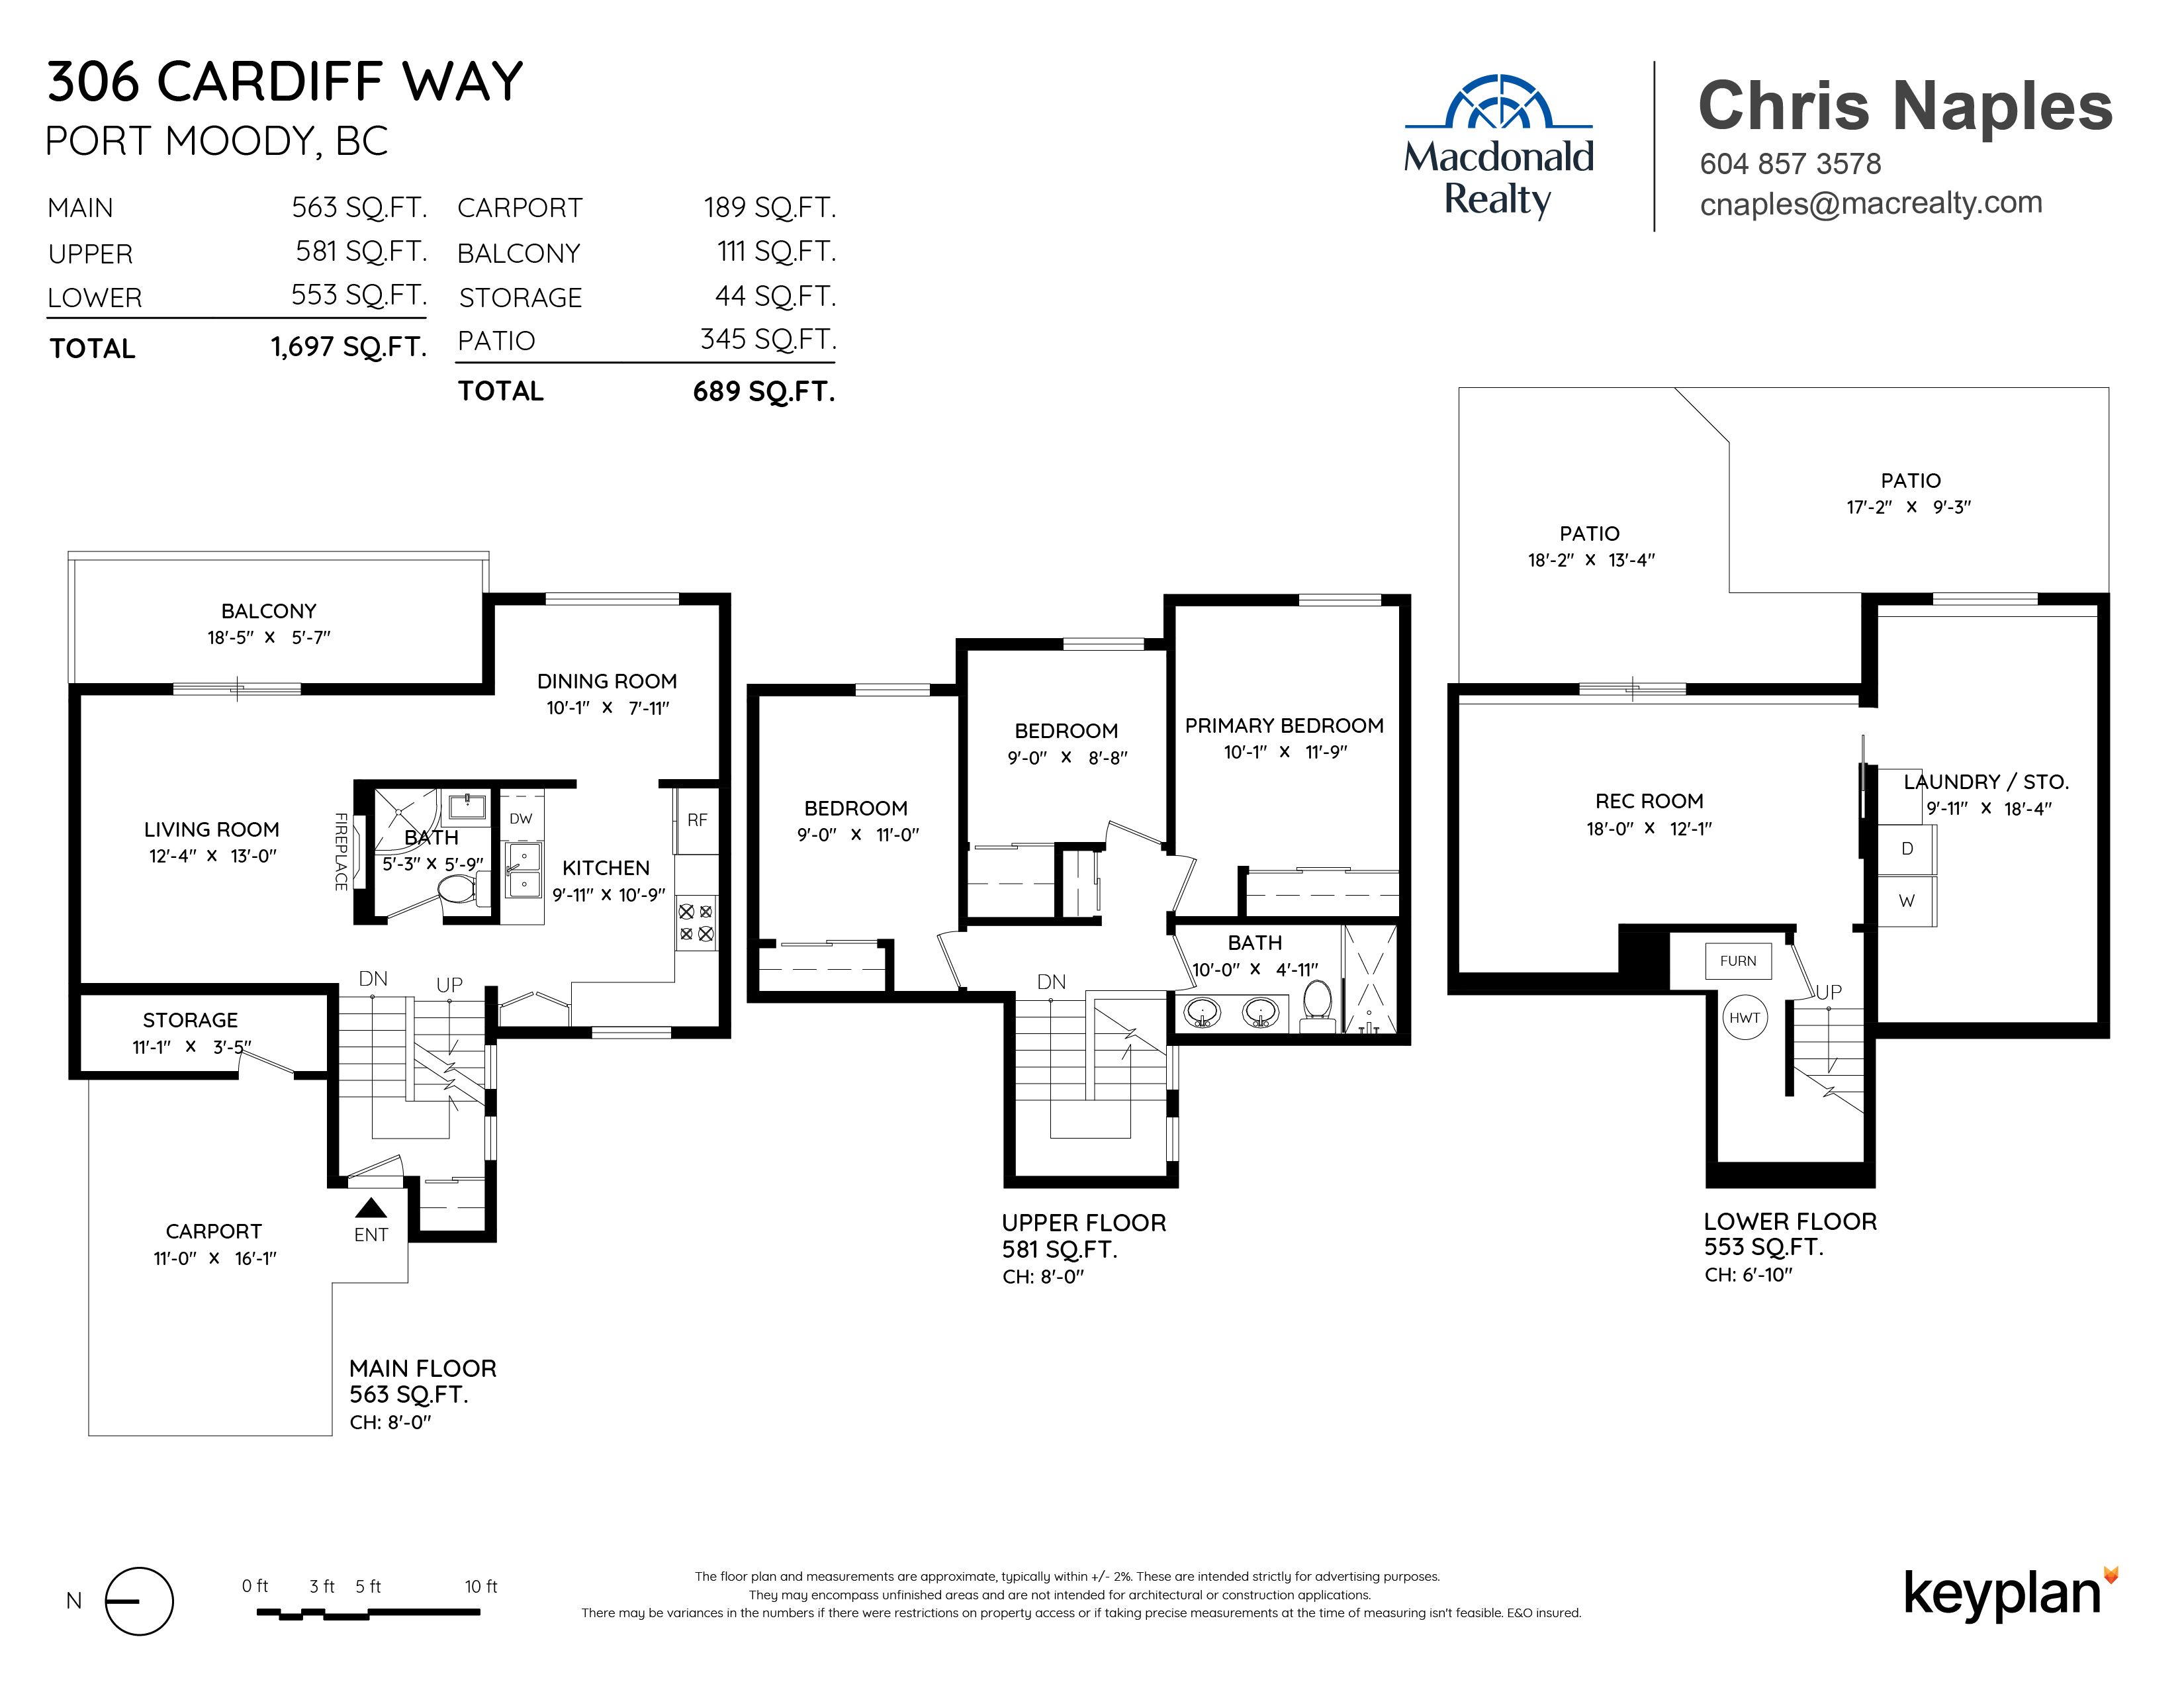 Chris Naples - 306 Cardiff Way, Port Moody, BC, Canada | Floor Plan 1